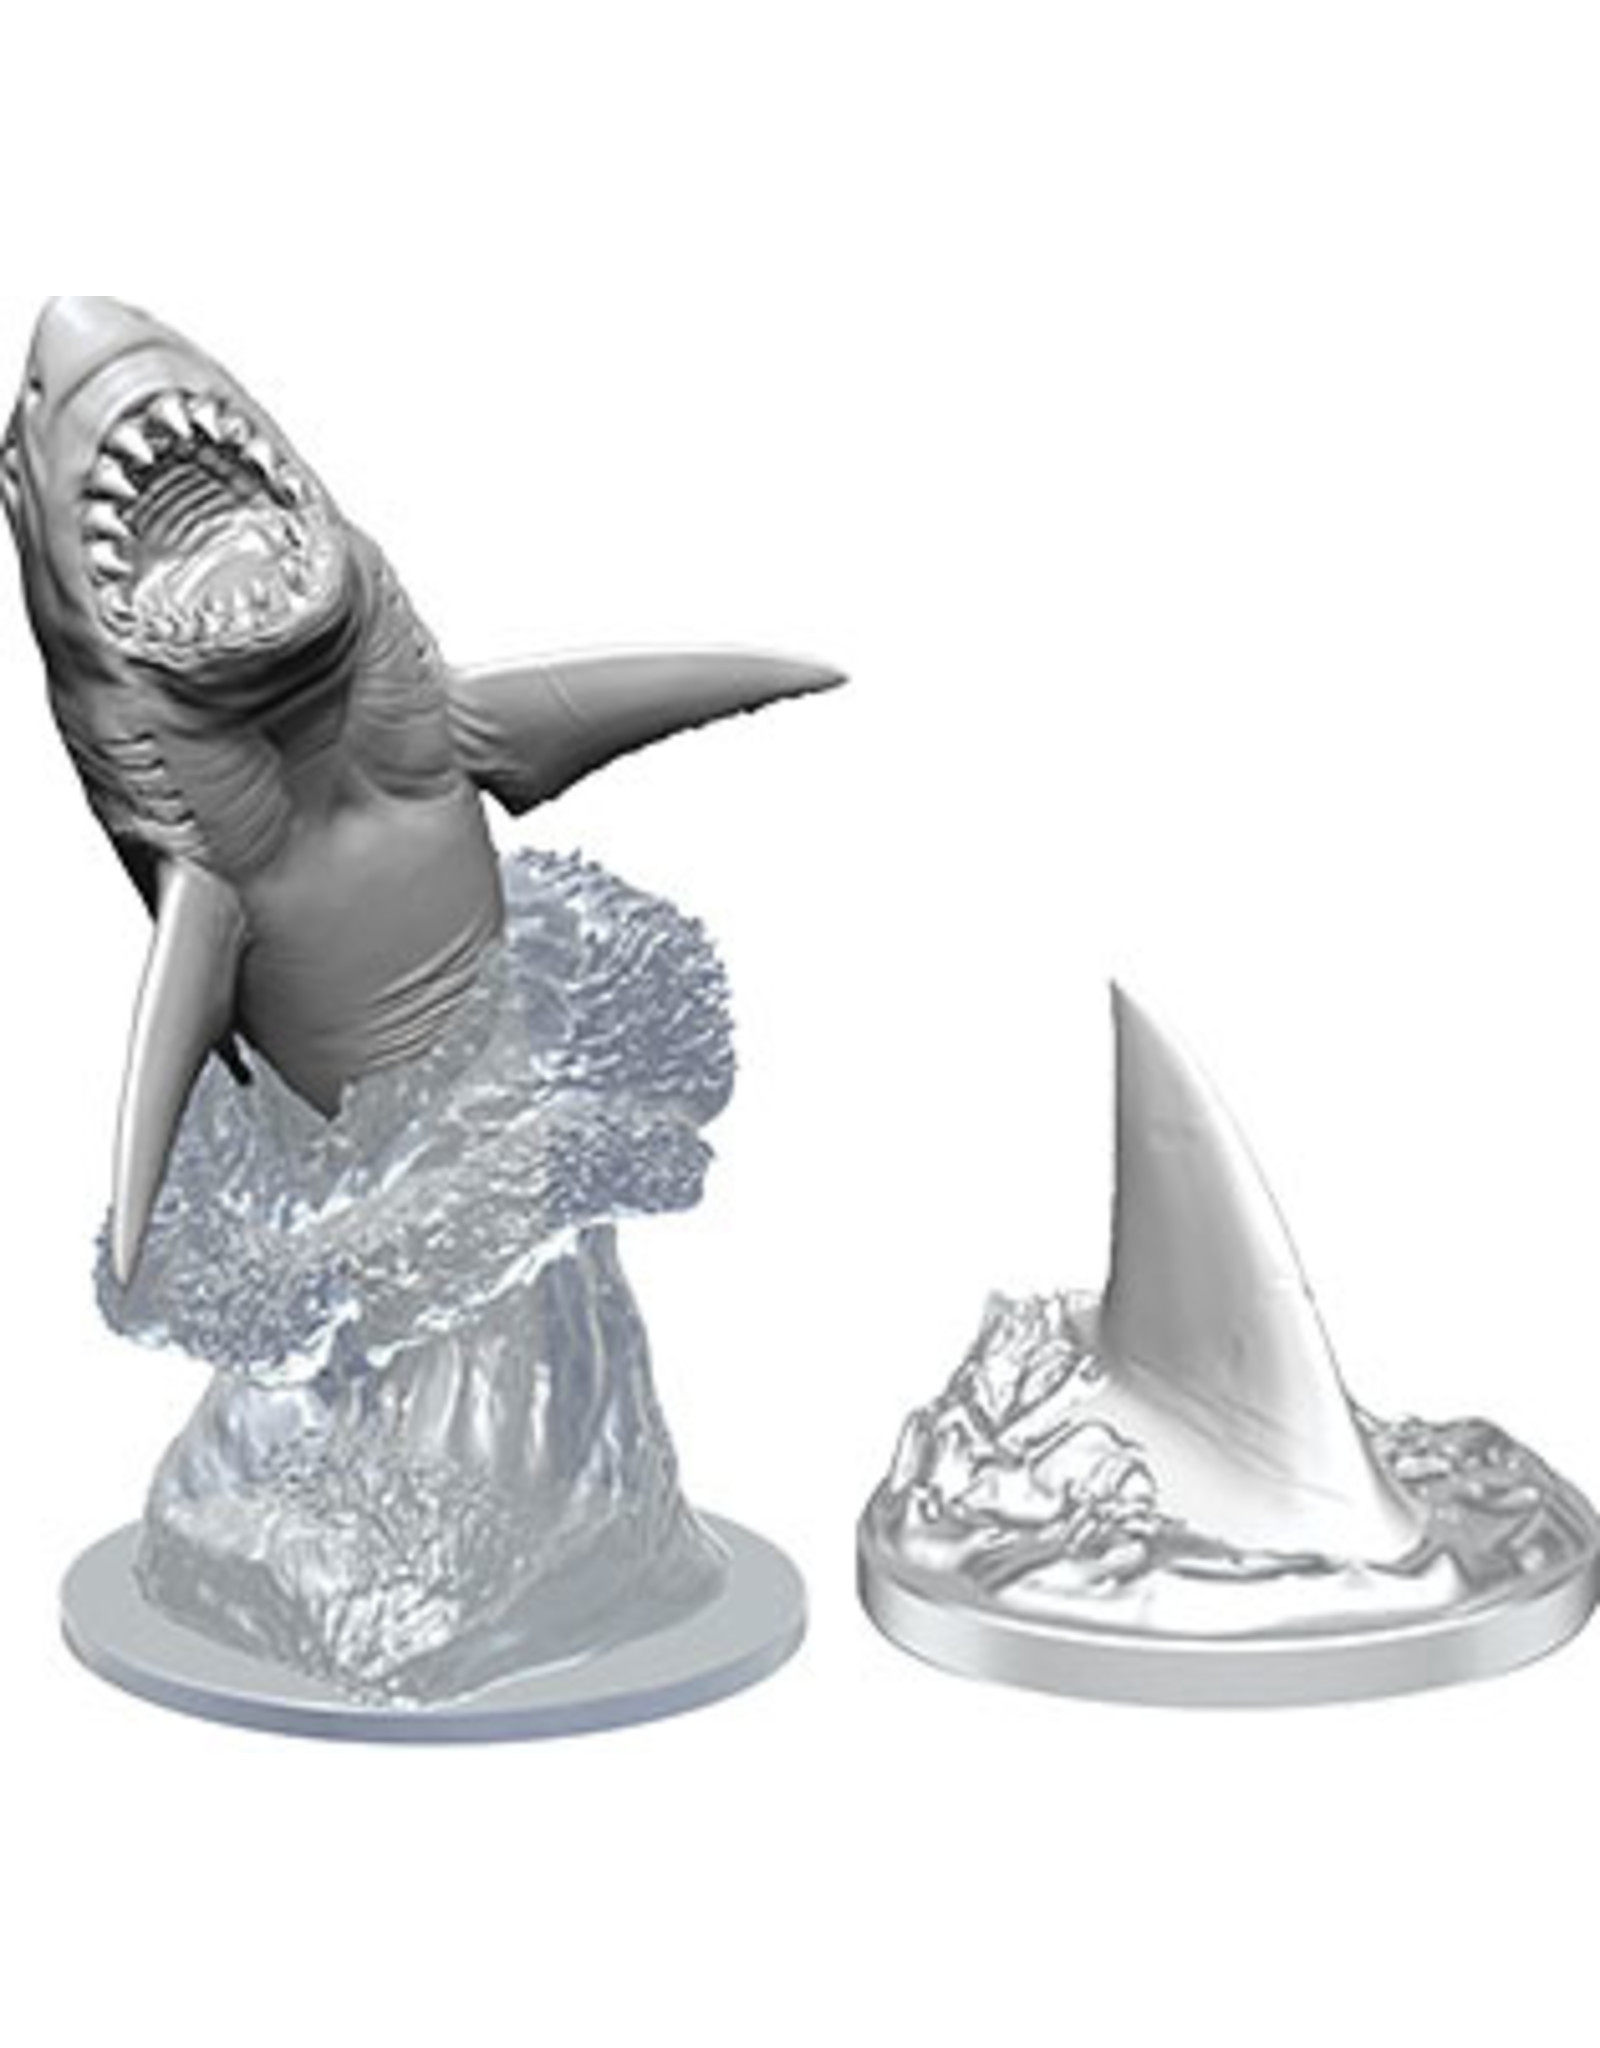 WizKids Deep Cuts Unpainted Minis: W9 Shark